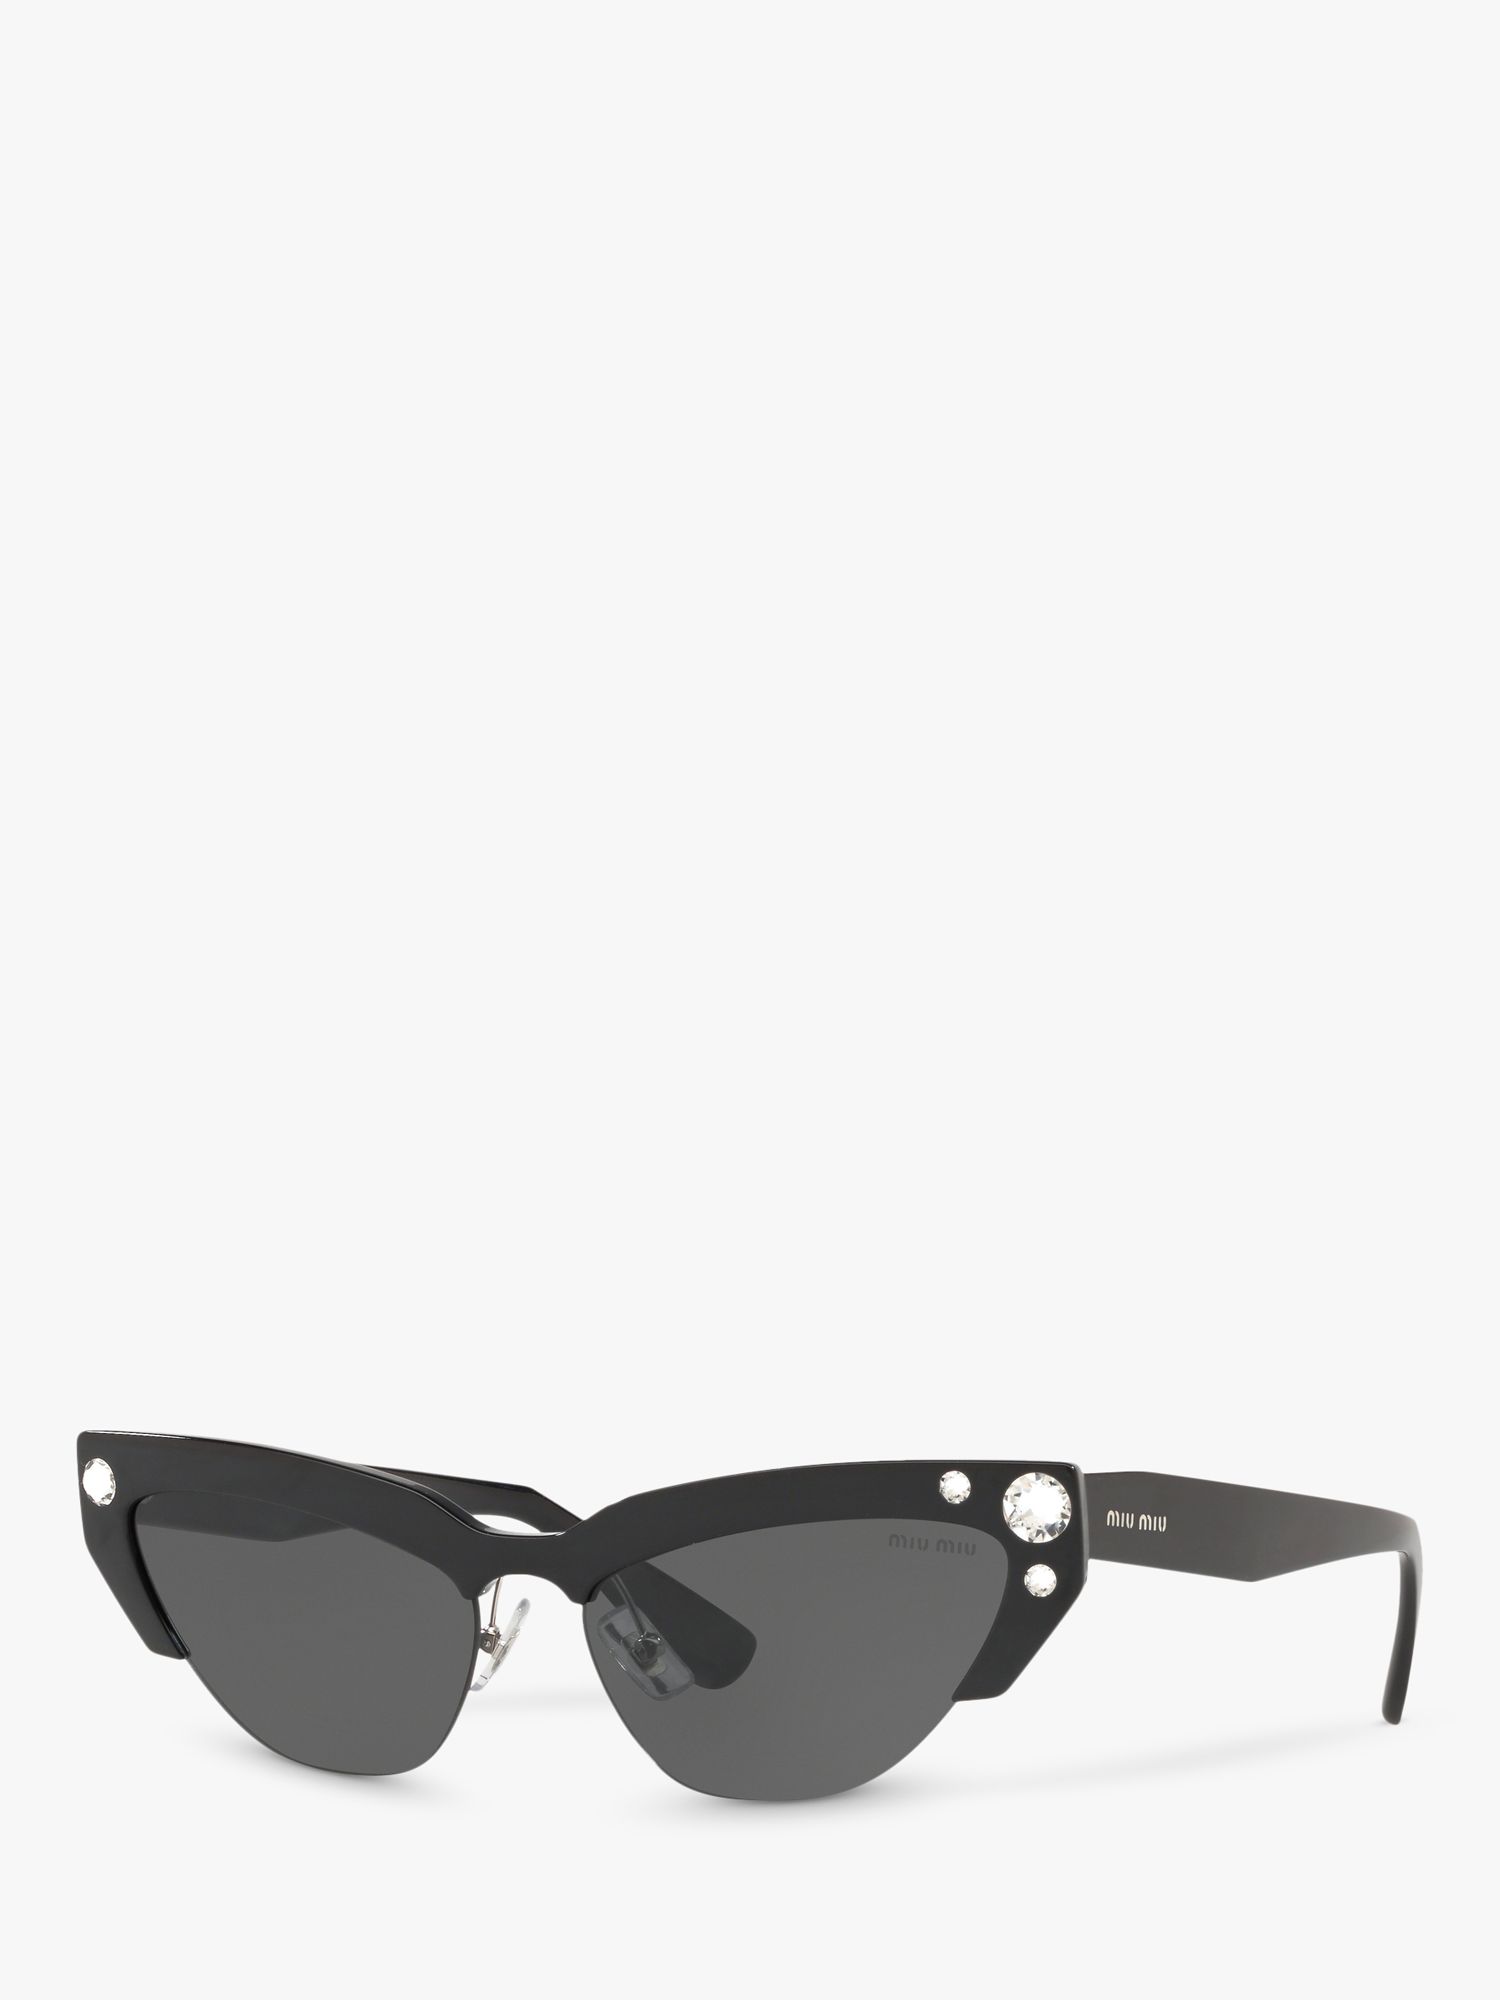 black sunglasses womens